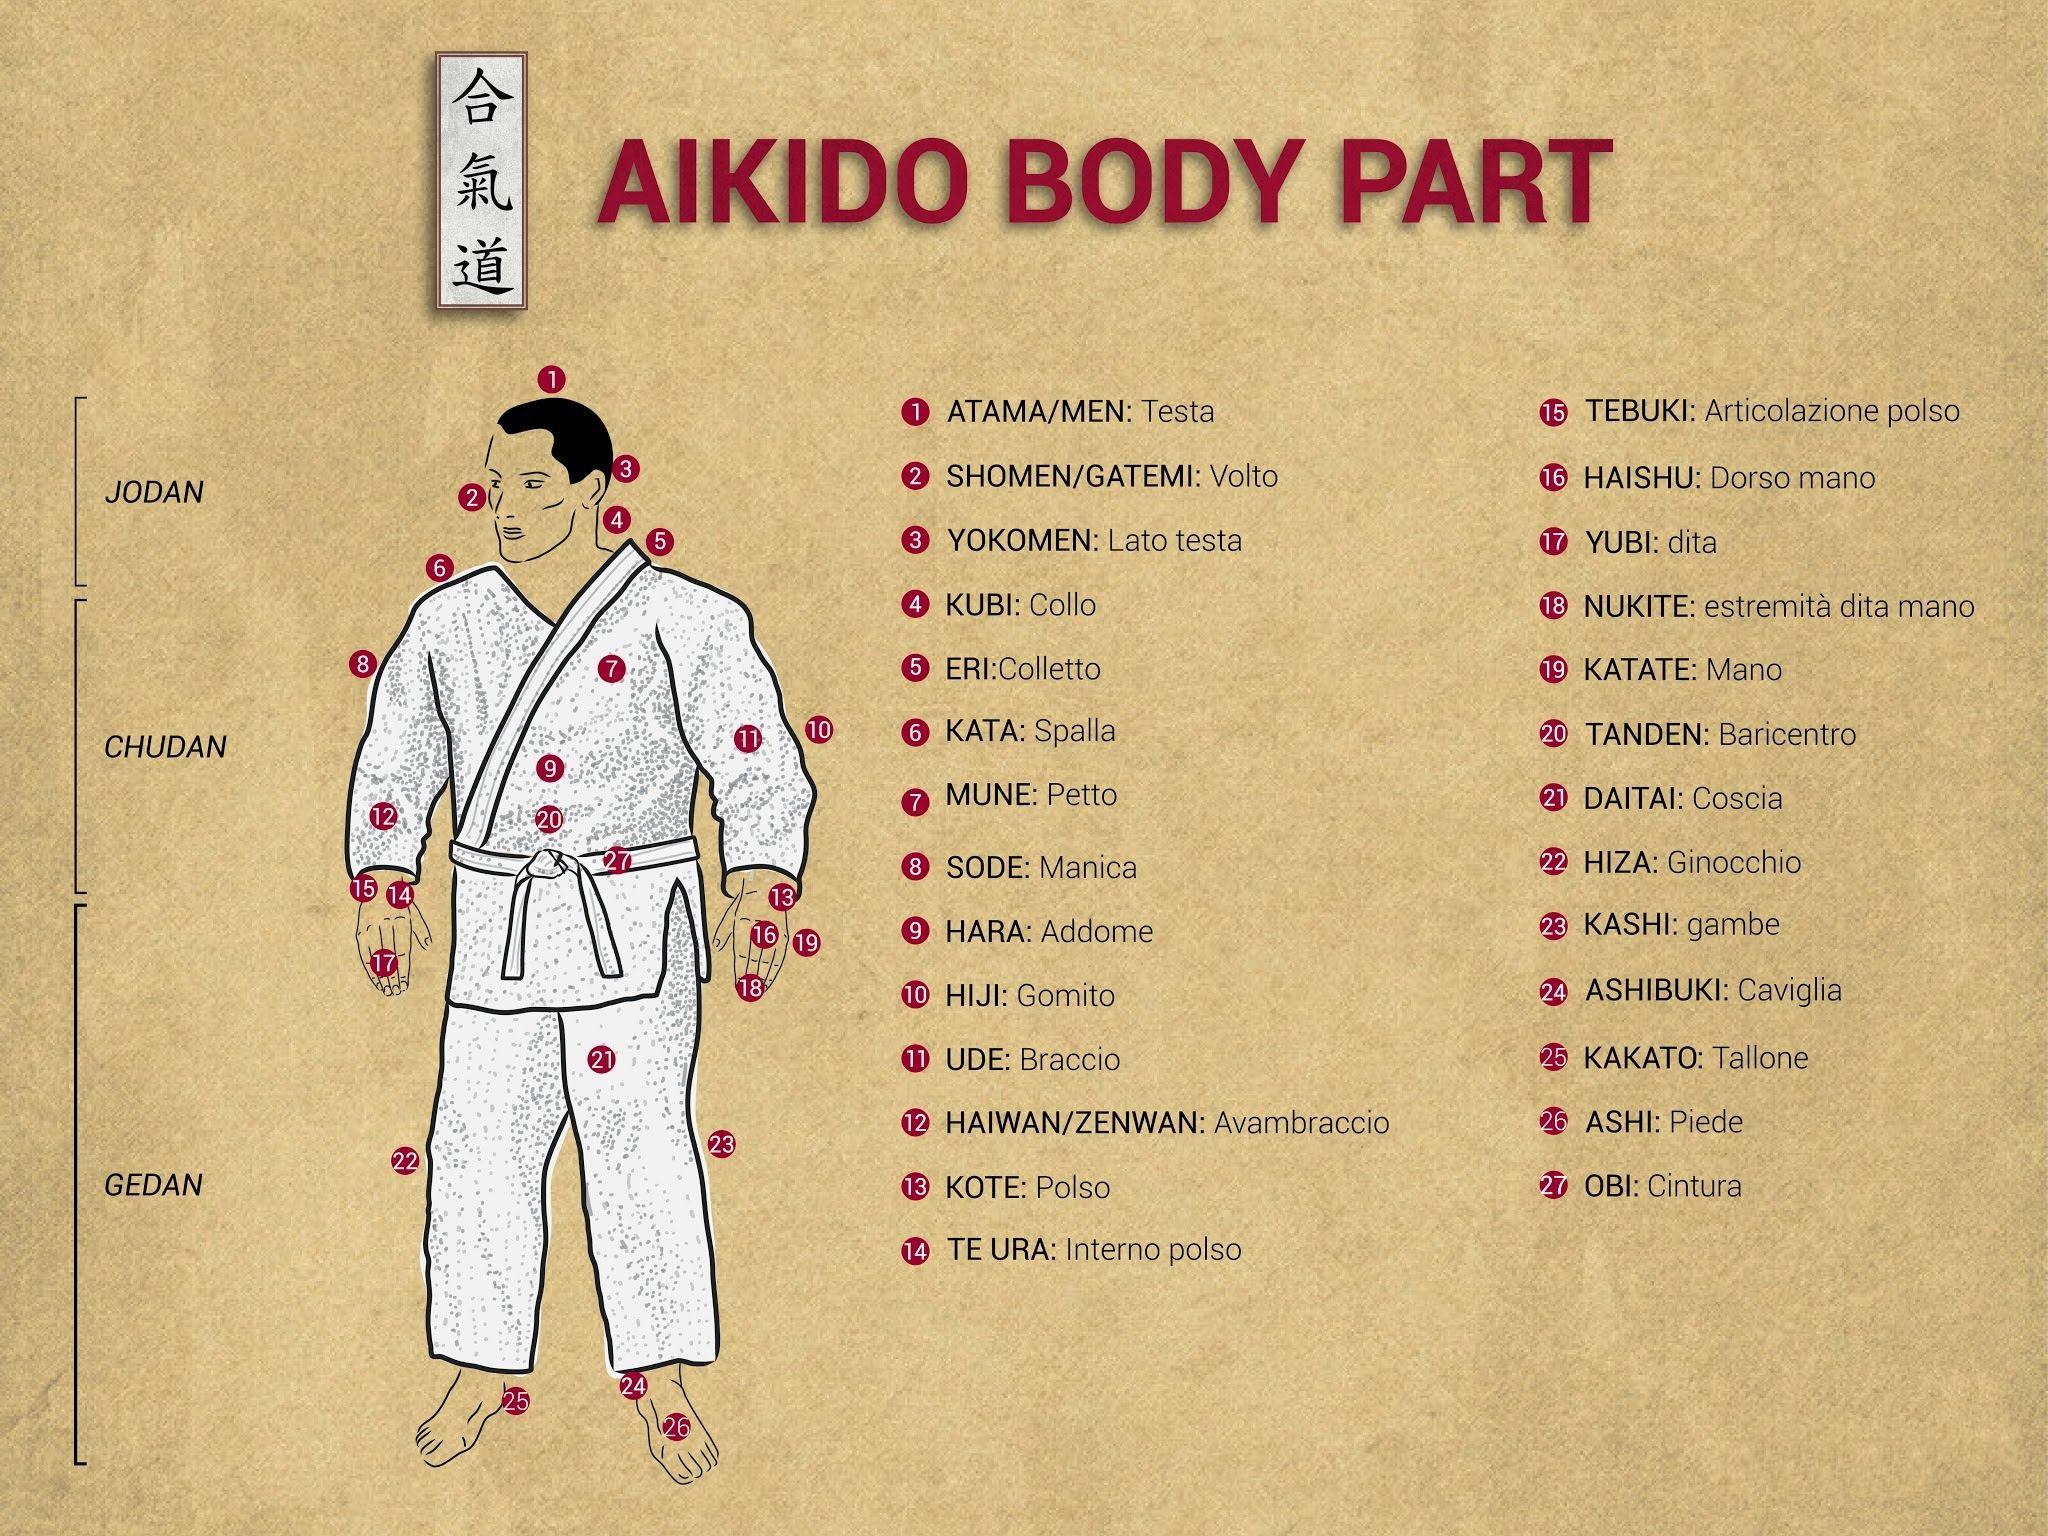 Wallpaper.wiki Aikido Body Part Wallpaper PIC WPC002252